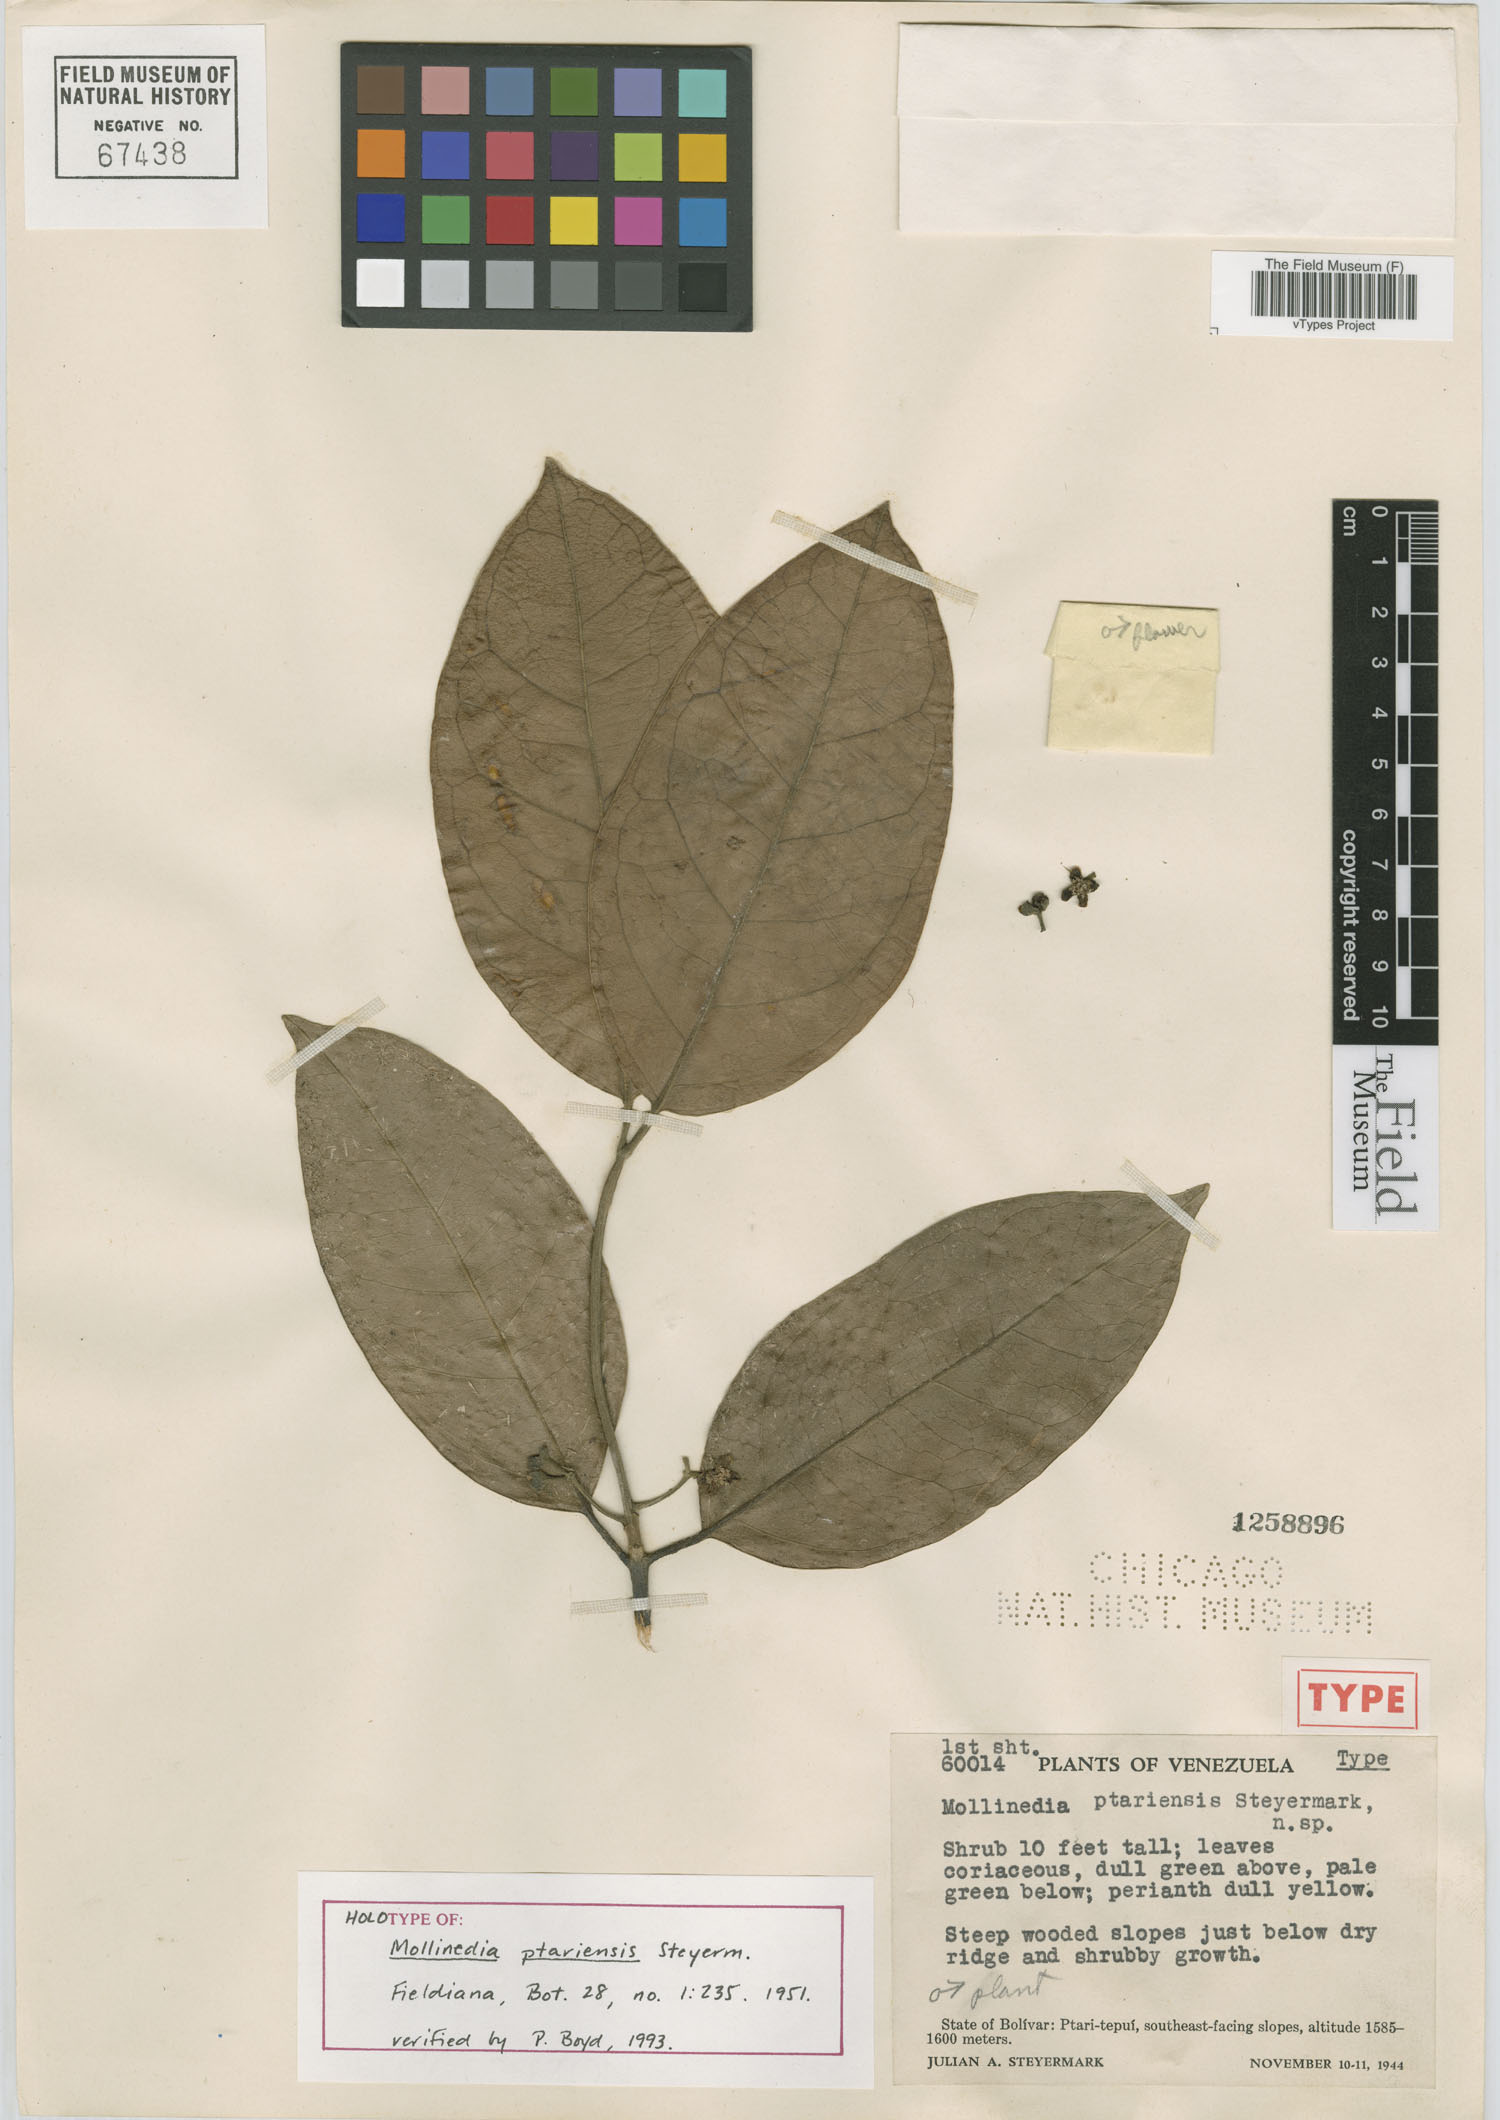 Mollinedia ptariensis image